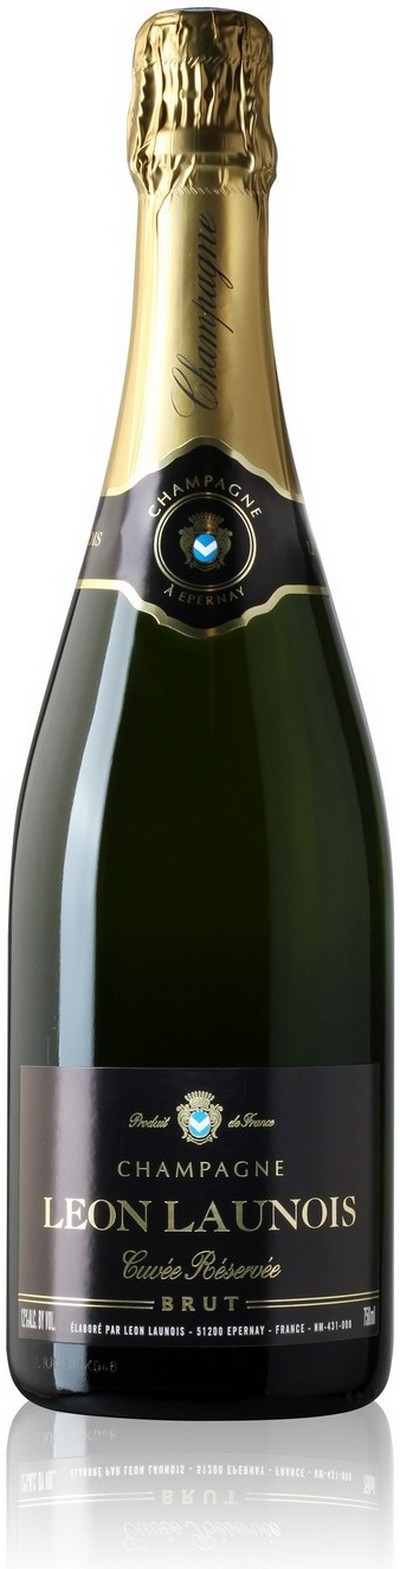 champagne-leon-launois-brut-cuvee-reservee-